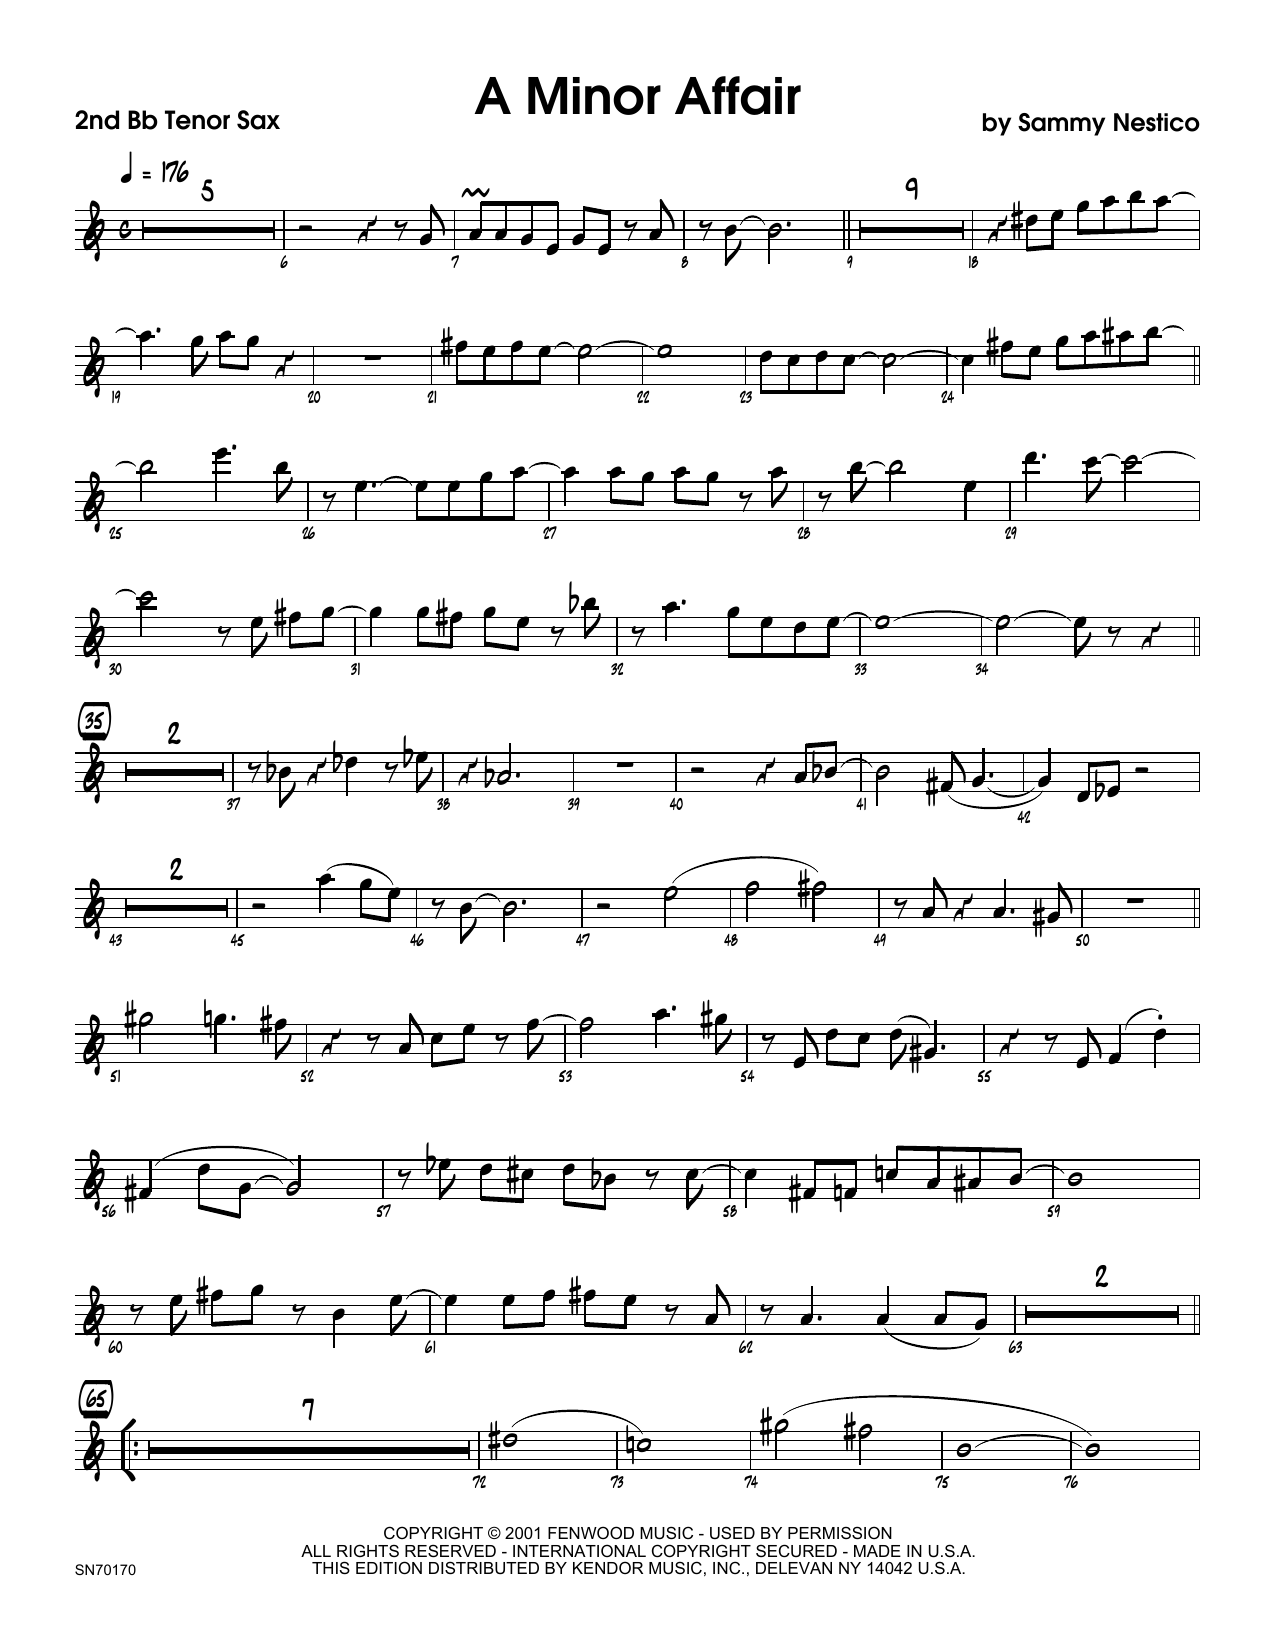 Download Sammy Nestico A Minor Affair - 2nd Bb Tenor Saxophone Sheet Music